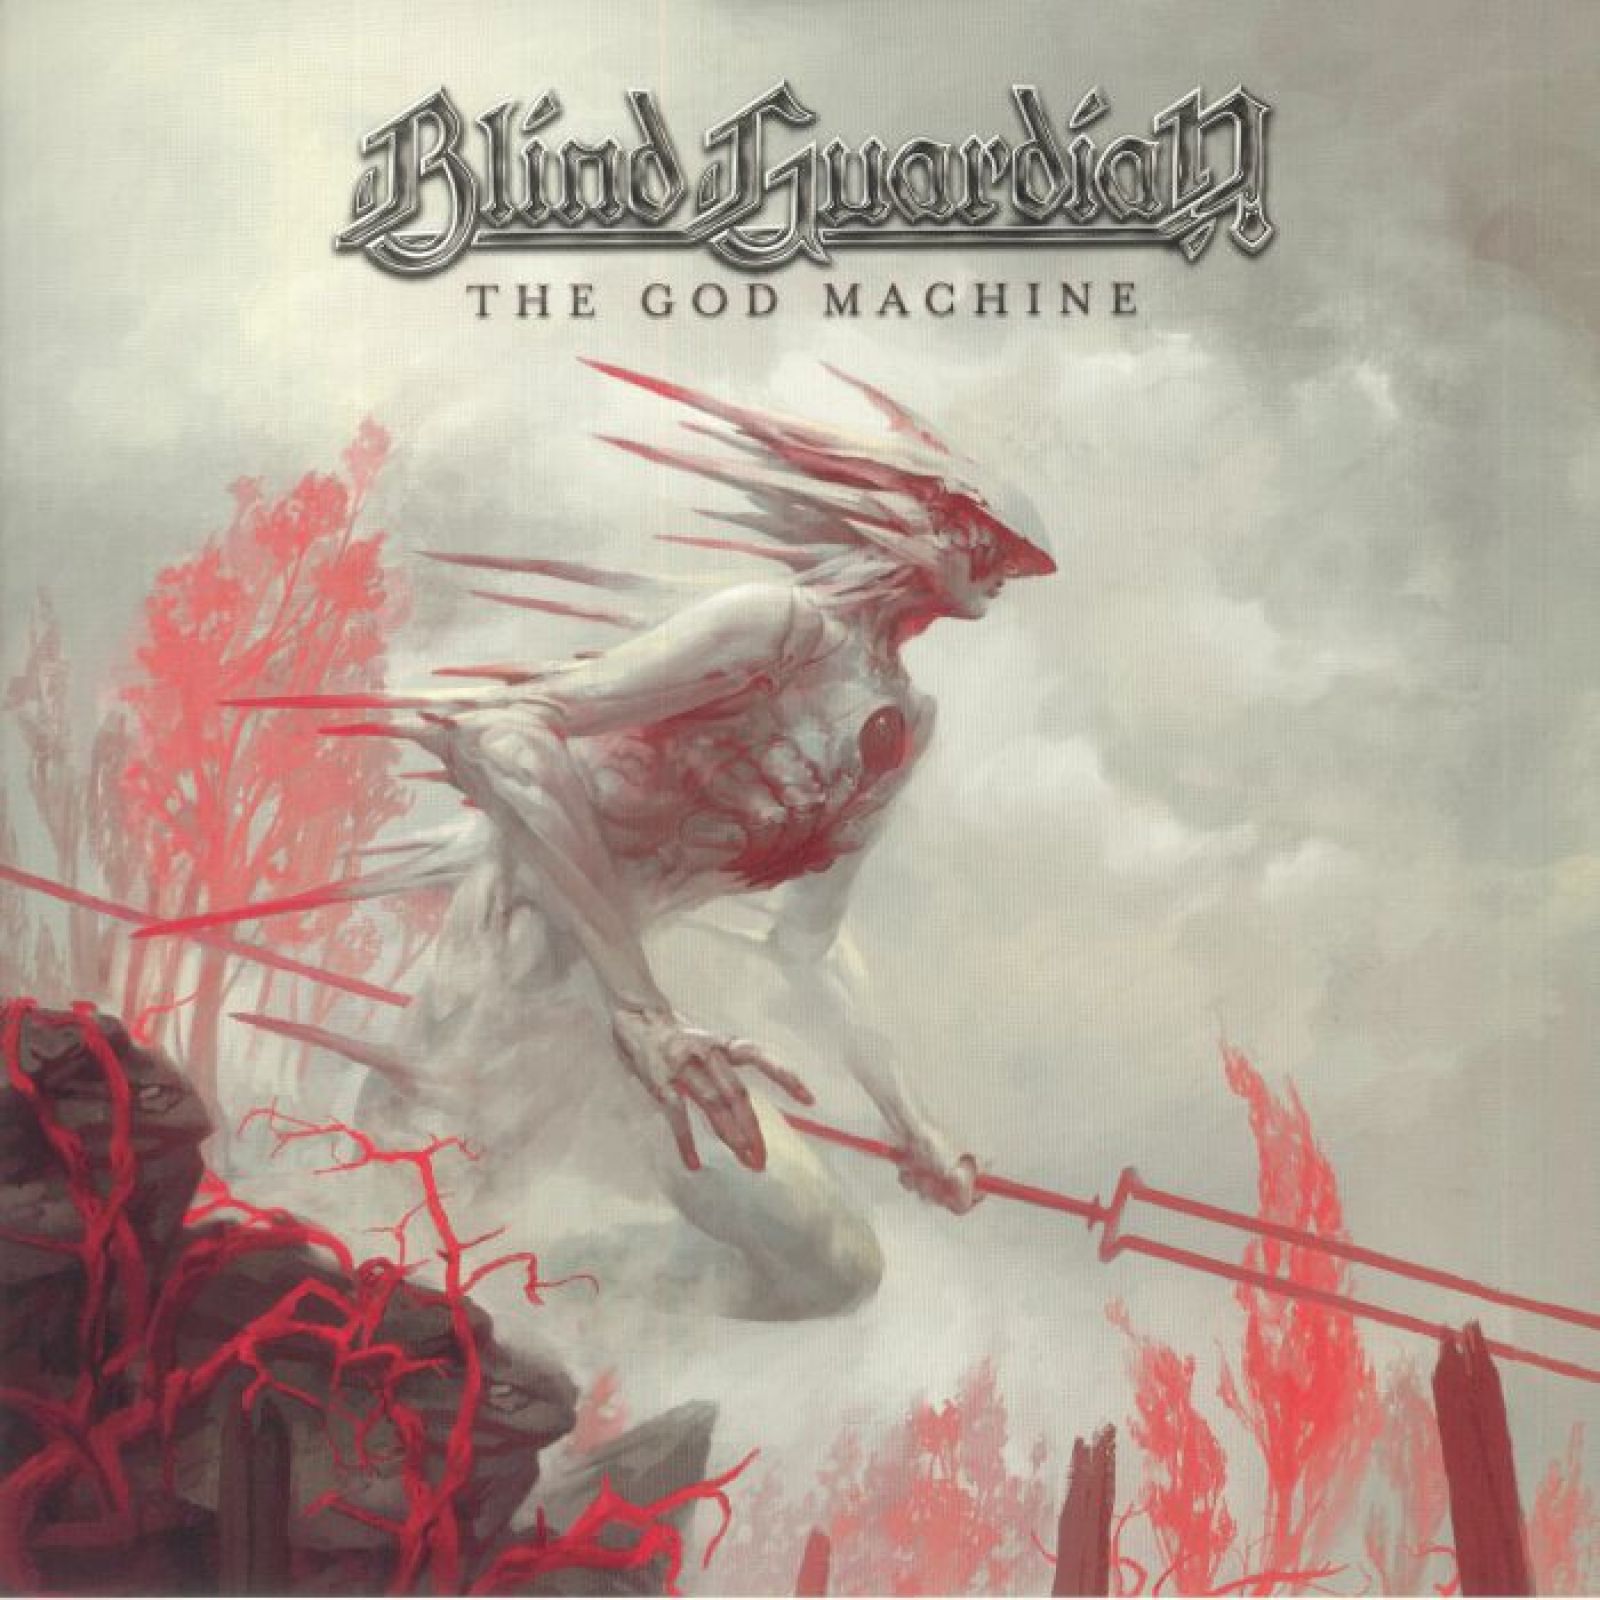 Виниловая пластинка Blind Guardian, The God Machine (0727361575519) виниловые пластинки nuclear blast benediction scriptures 2lp